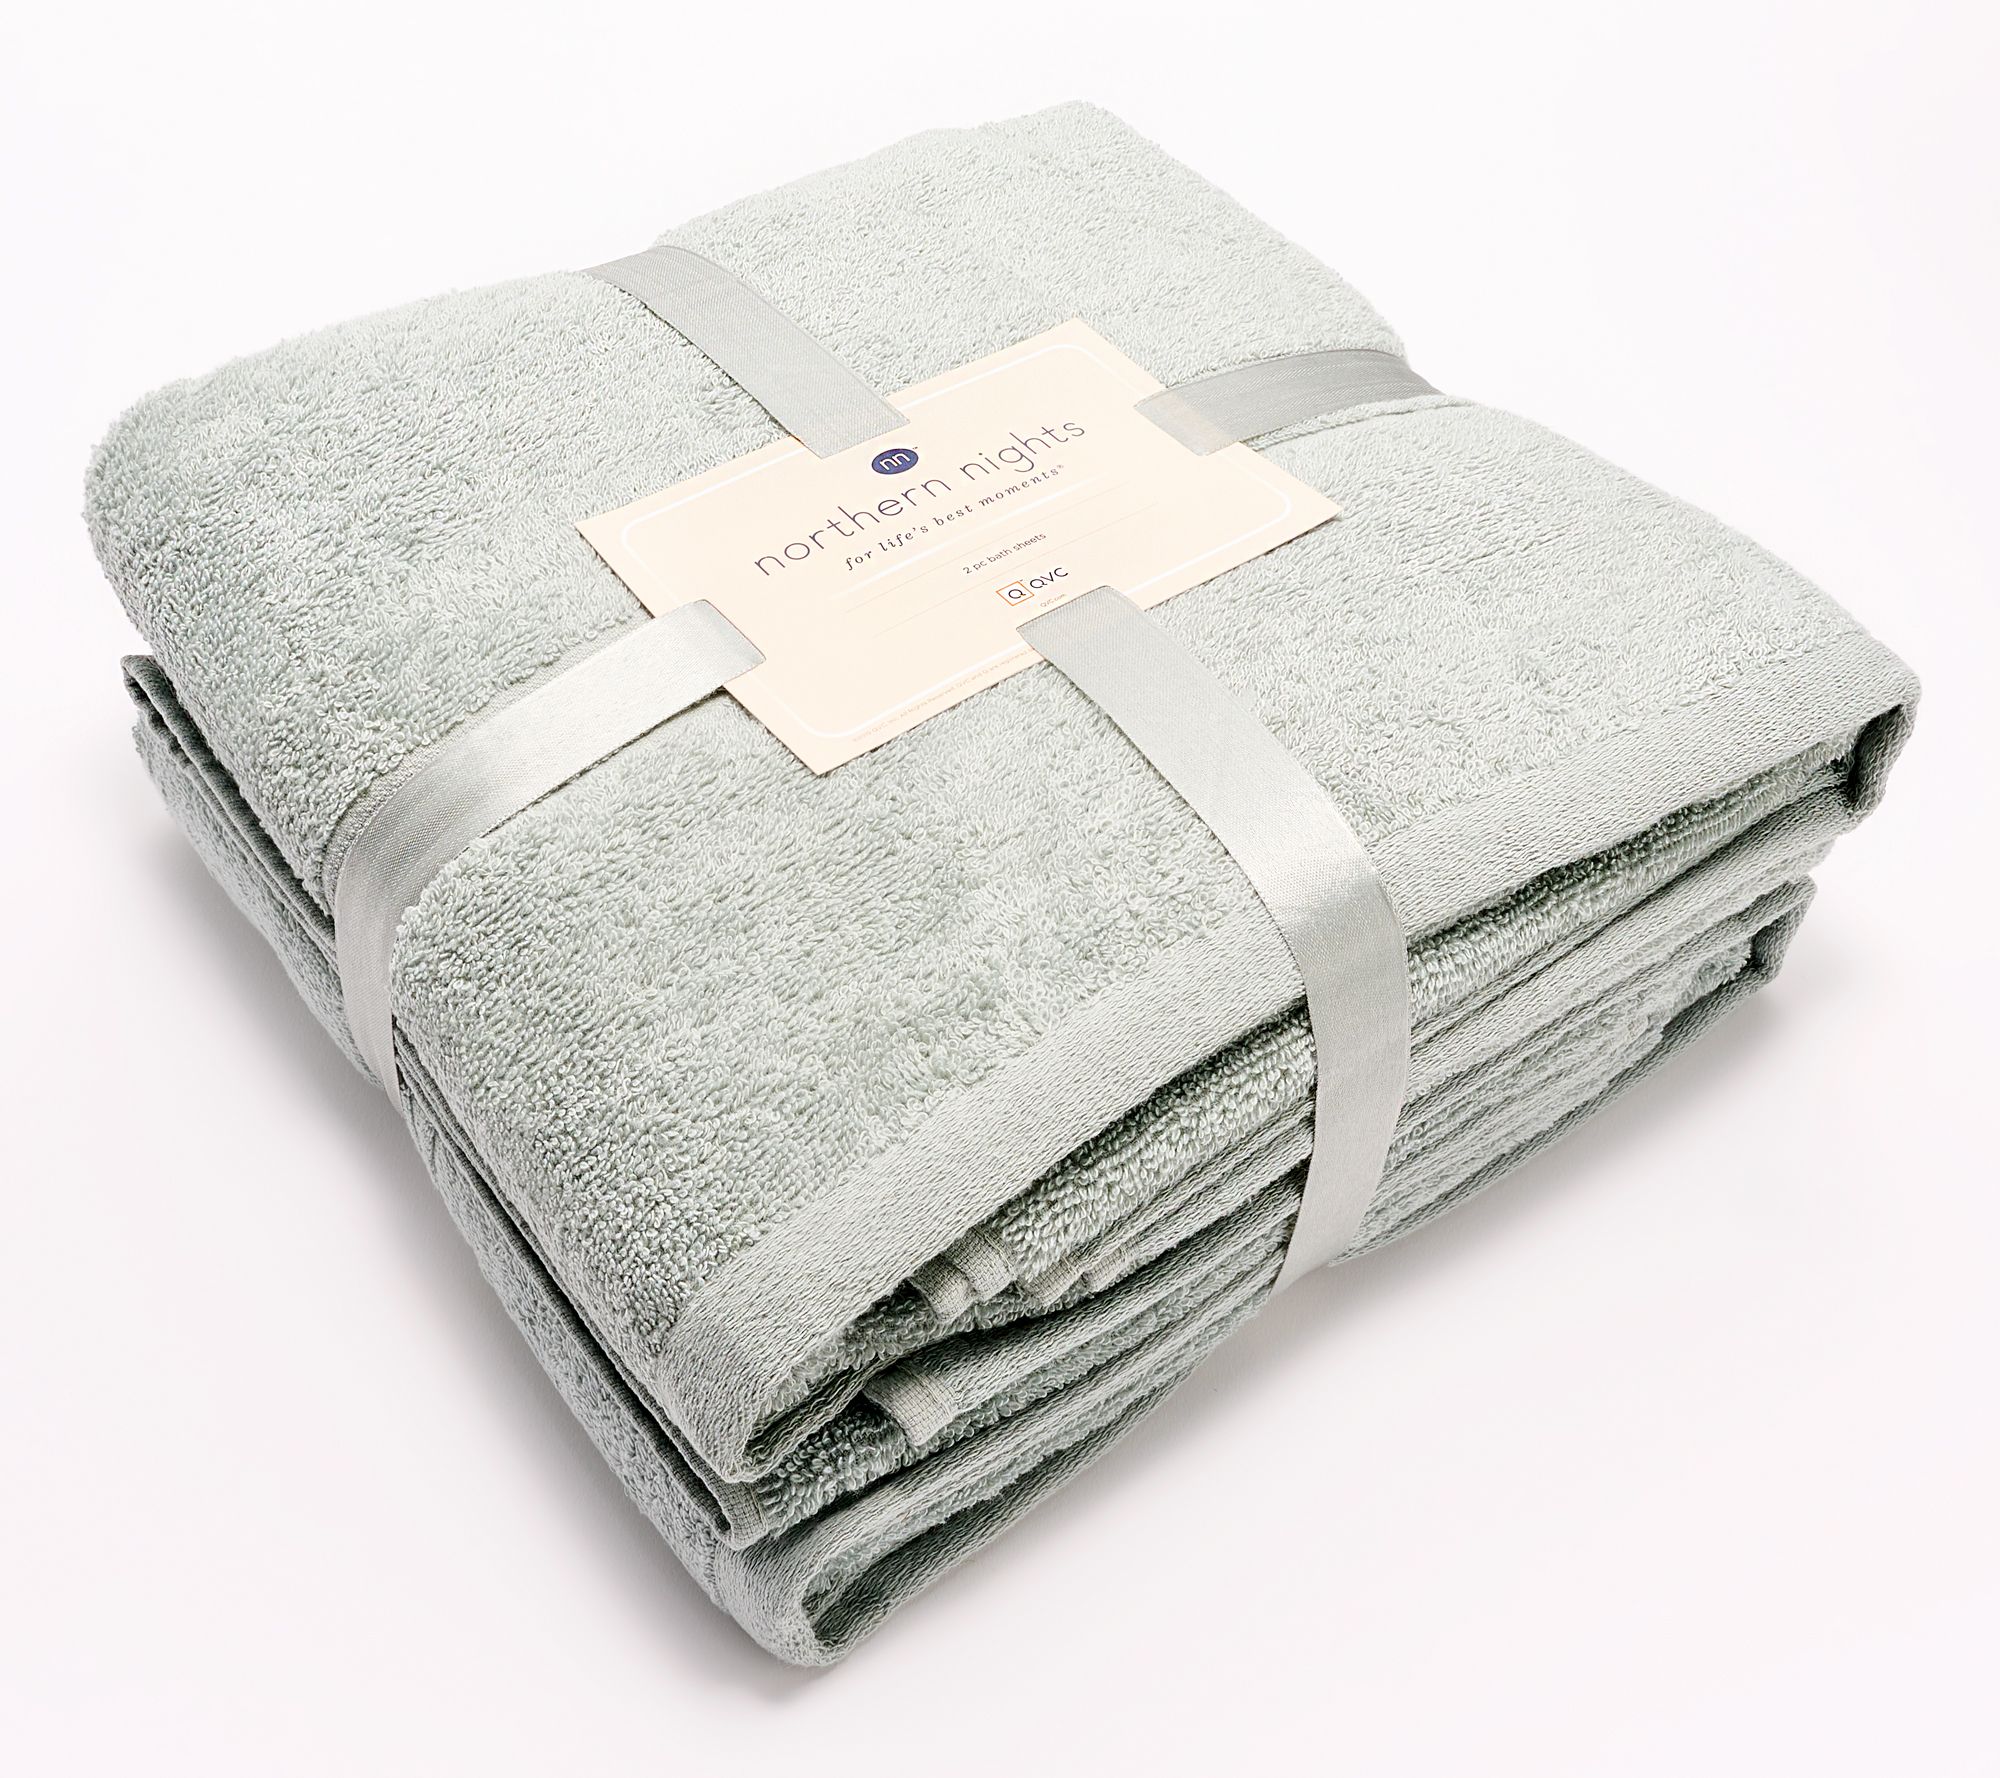 Charisma Soft 100% Hygro Cotton 2-piece Bath Towel Set spa Machine